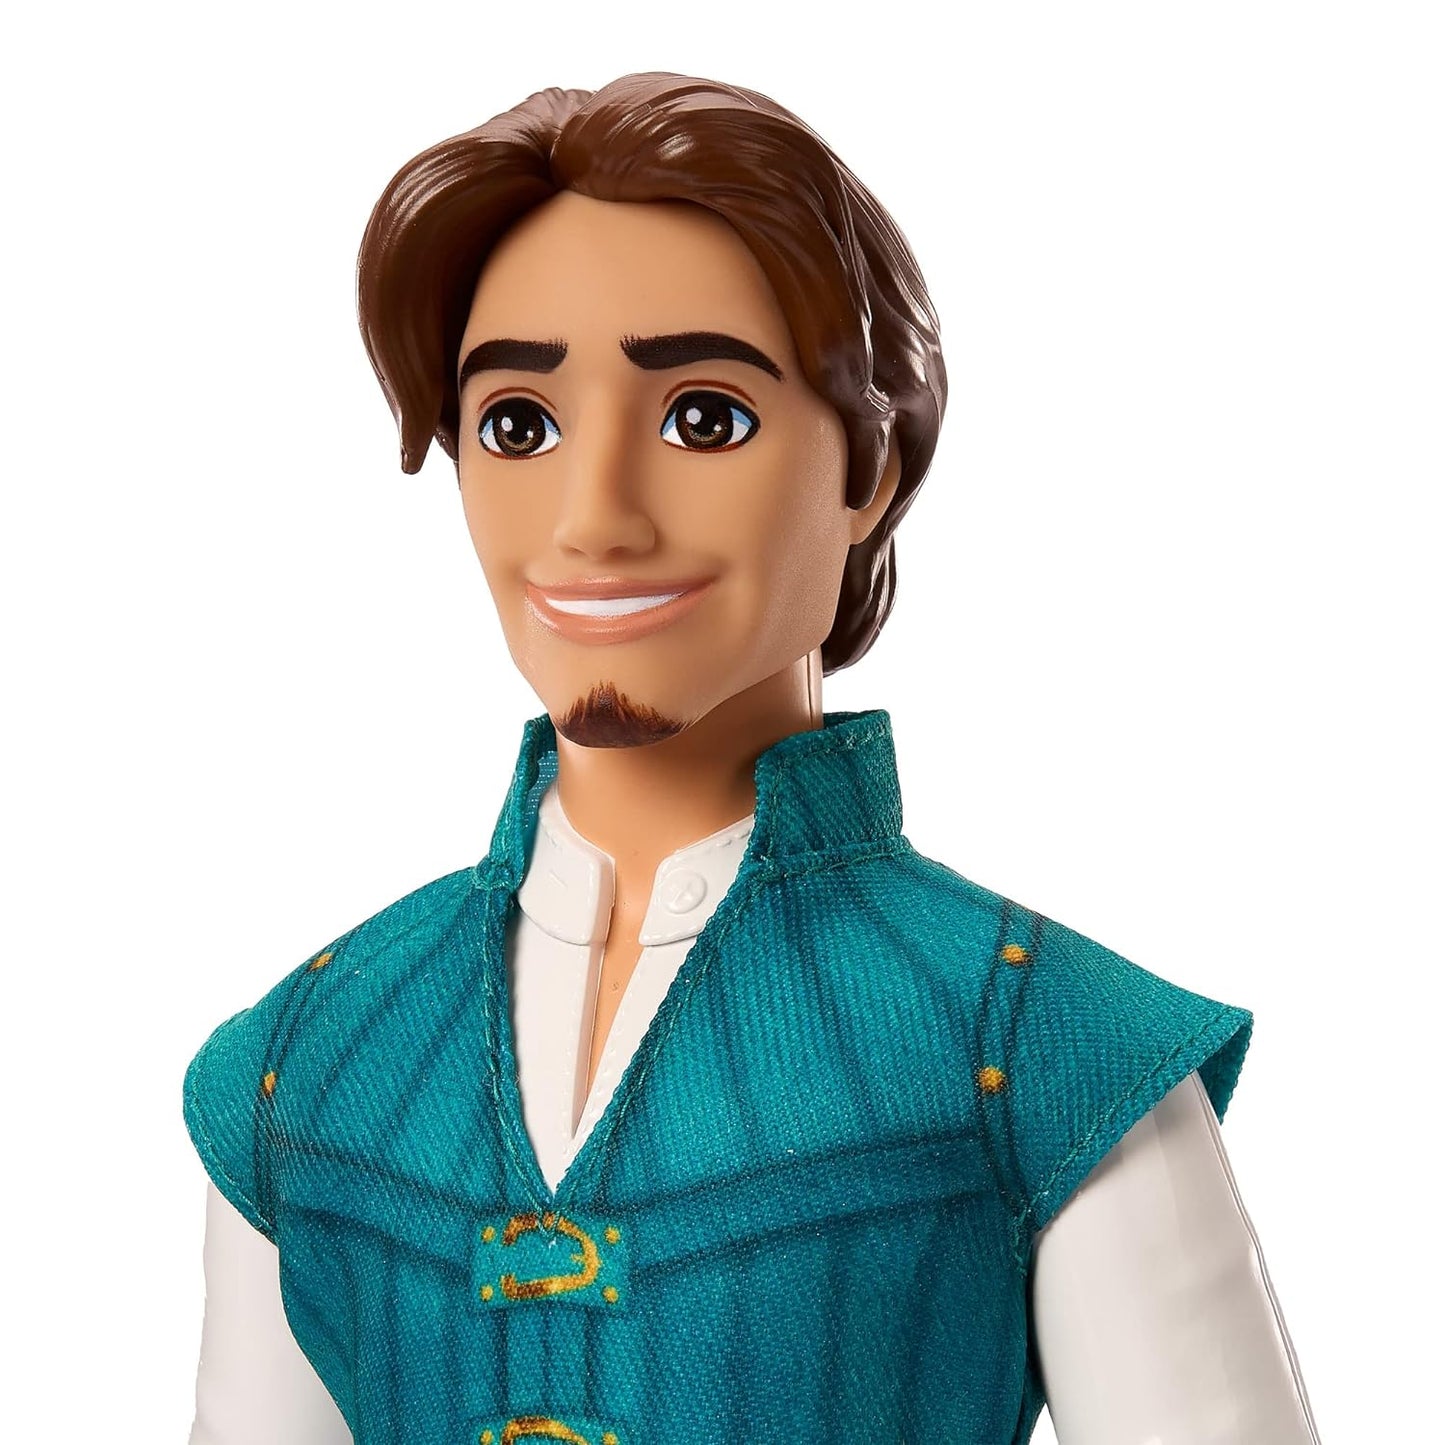 Disney Princess - Rapunzel And Flynn Rider Dolls And Accessories